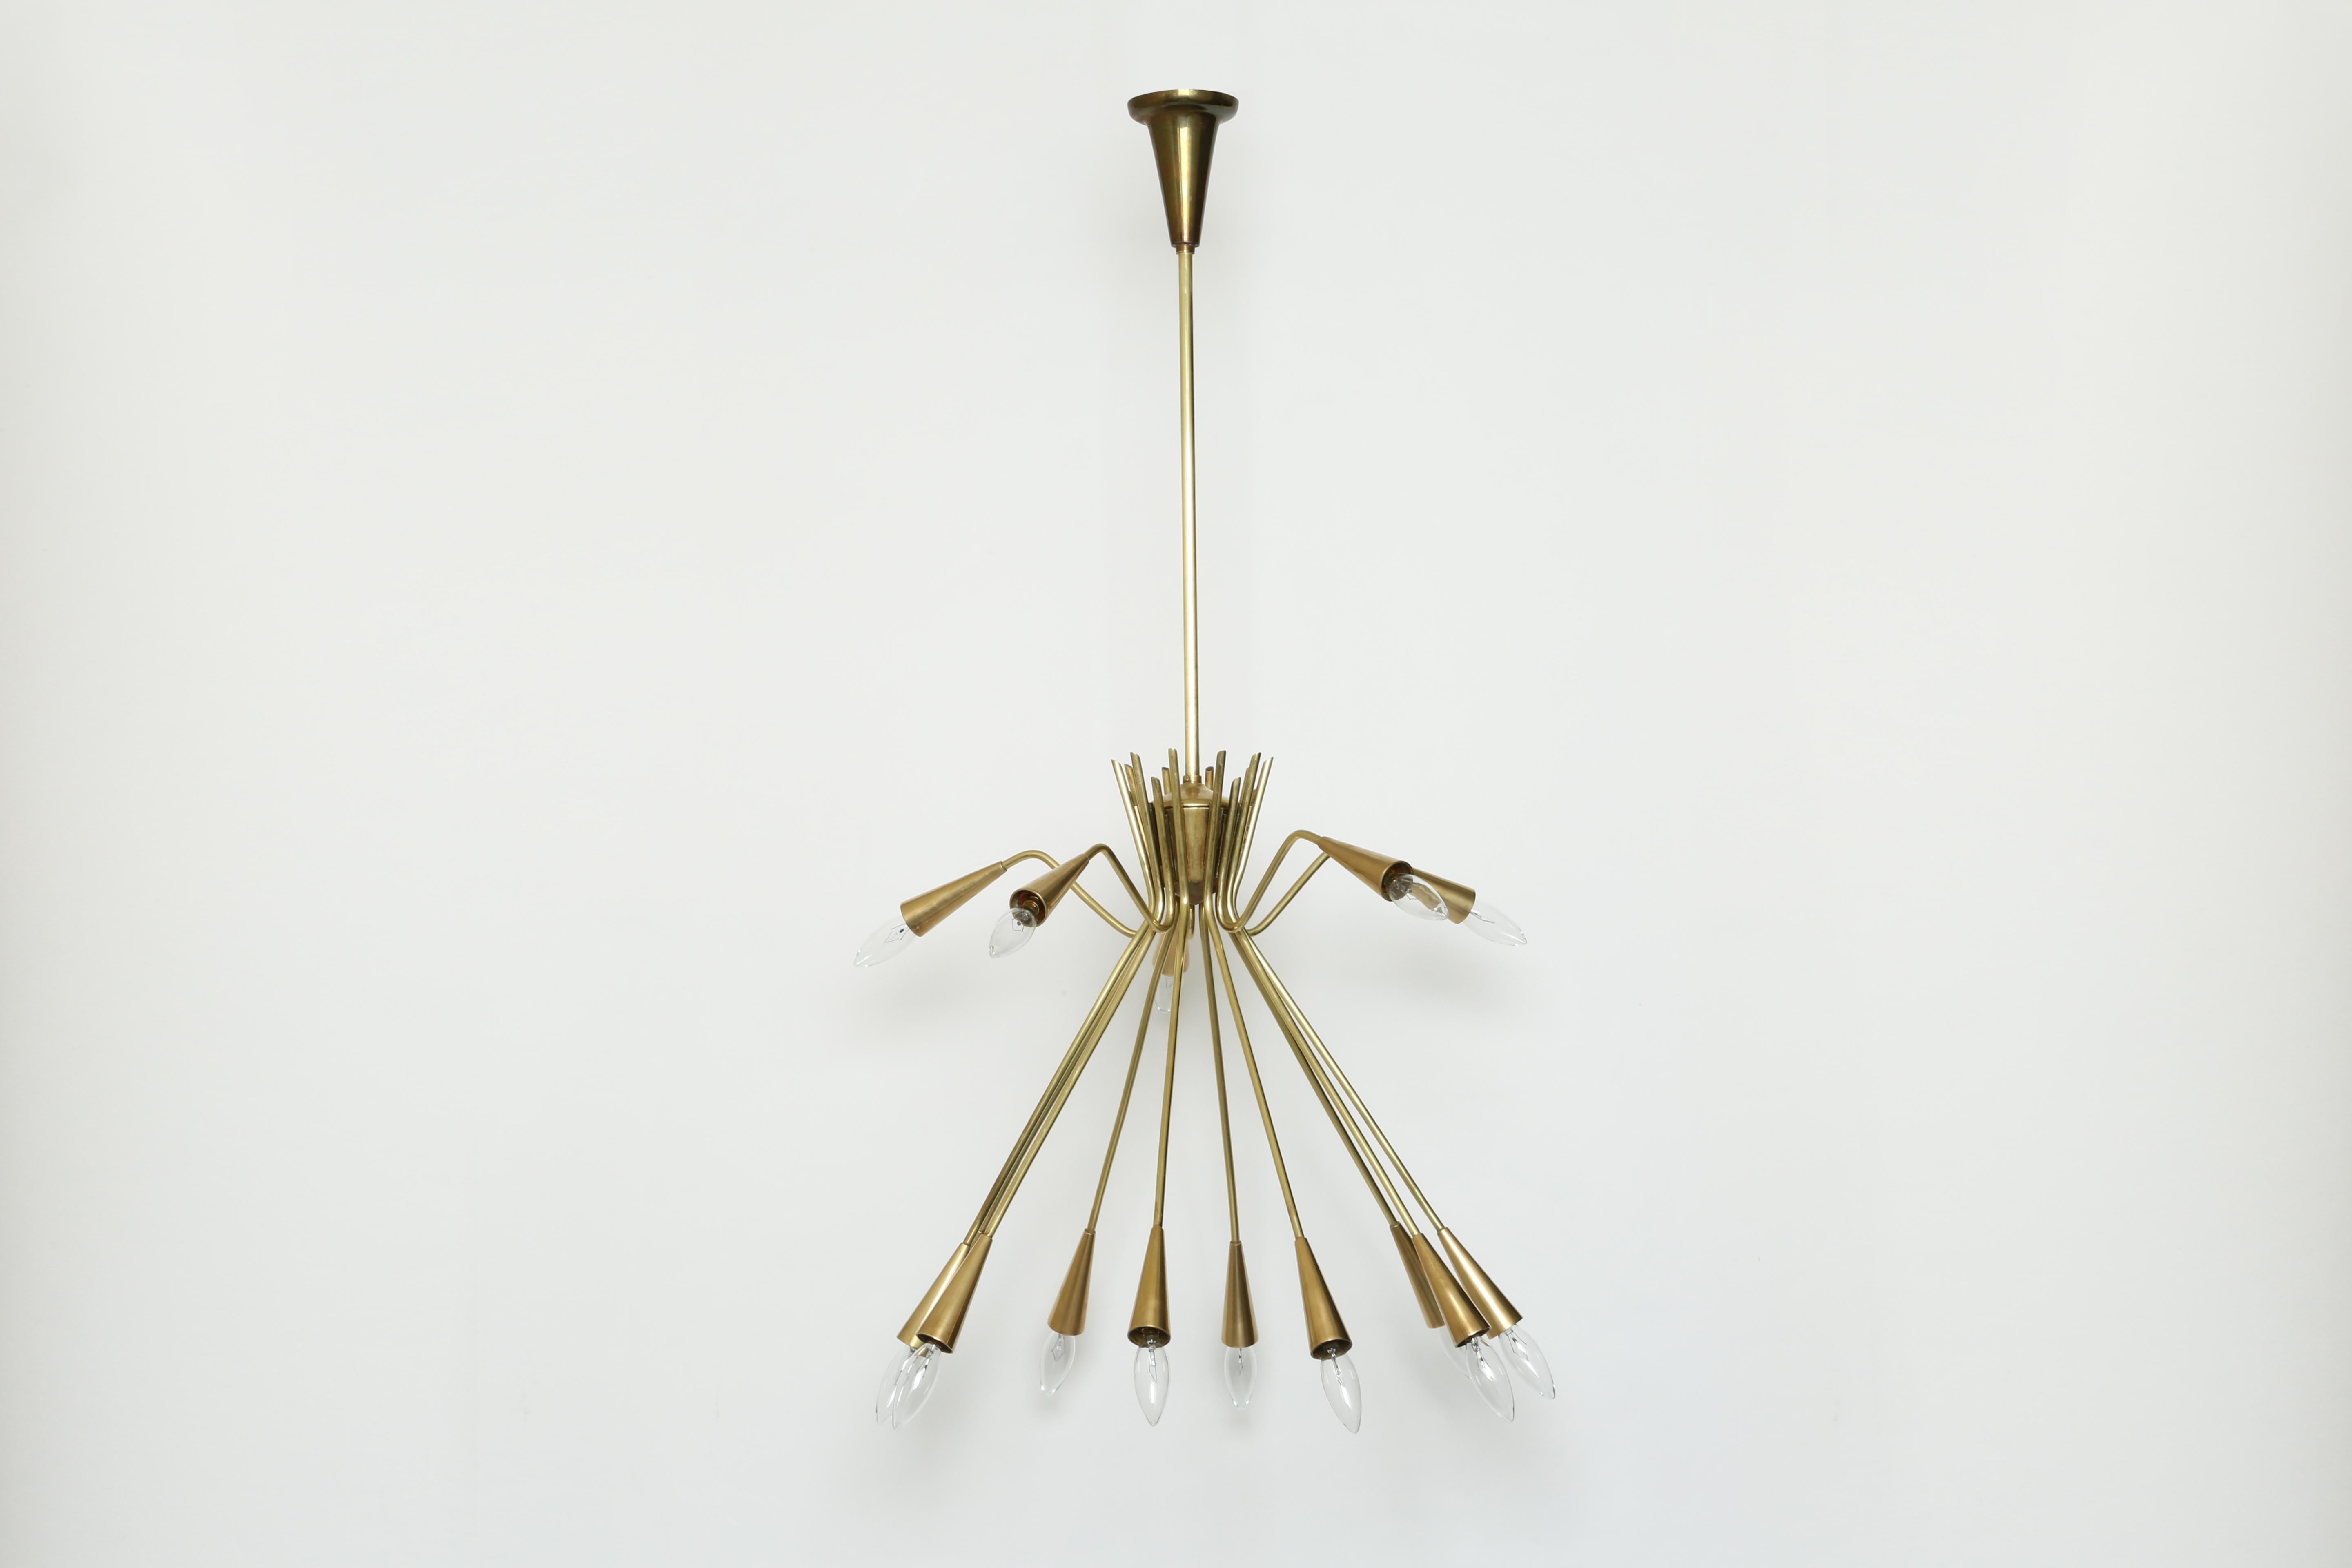 Sputnik Oscar Torlasco style brass chandelier.
Italy, 1960s.
15 arms with candelabra sockets.